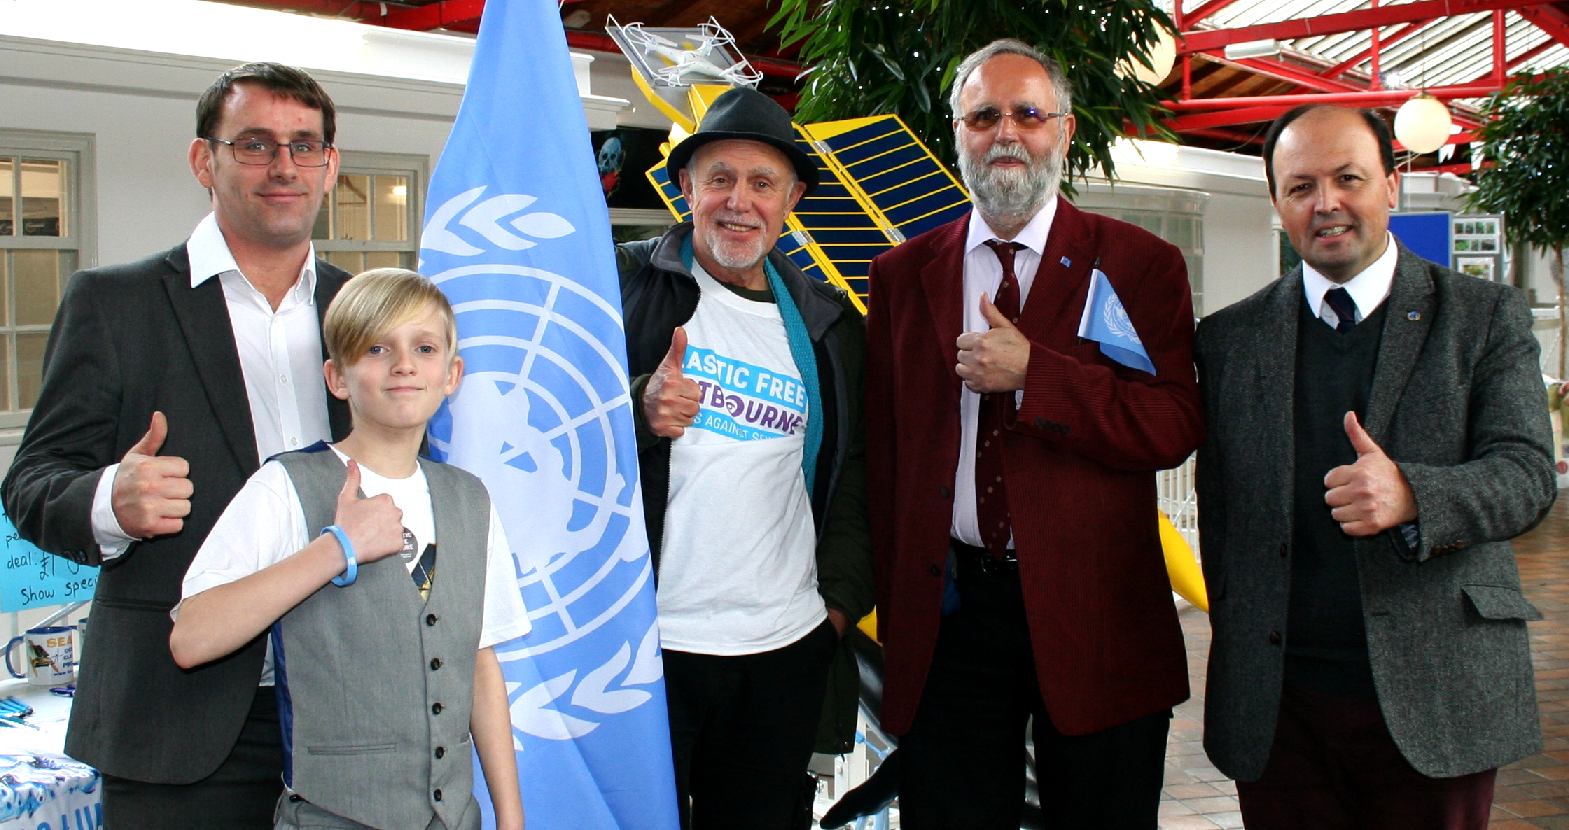 United Nations UK, Gonzalo Alvarez with David Stopp and Chris Close